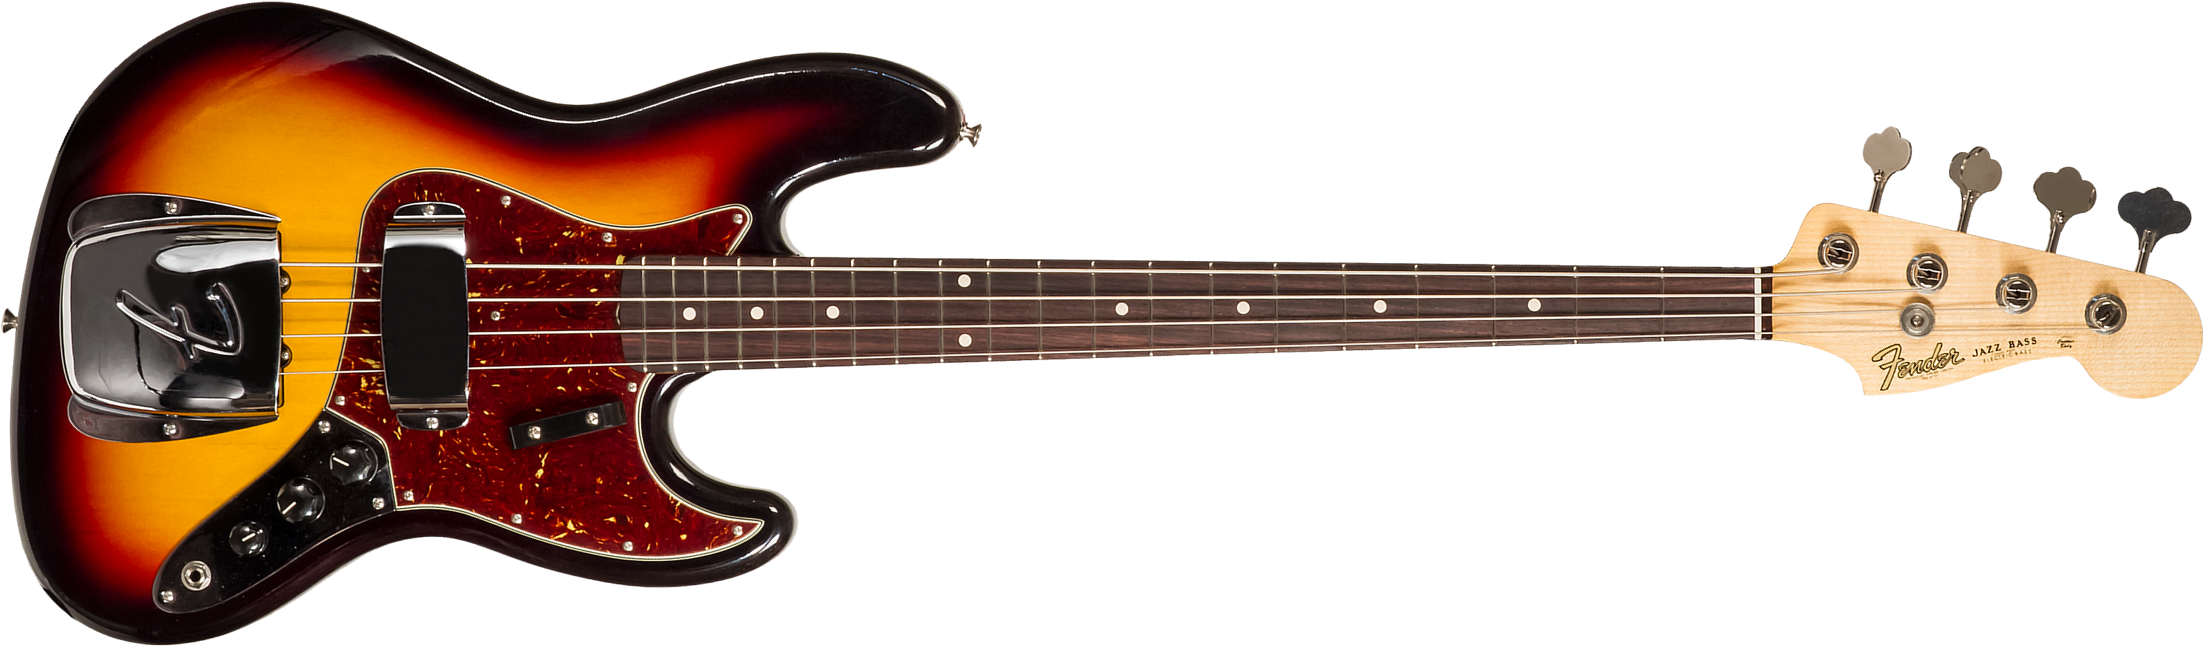 Fender Custom Shop Jazz Bass 1964 Rw #r129293 - Closet Classic 3-color Sunburst - Solid body elektrische bas - Main picture